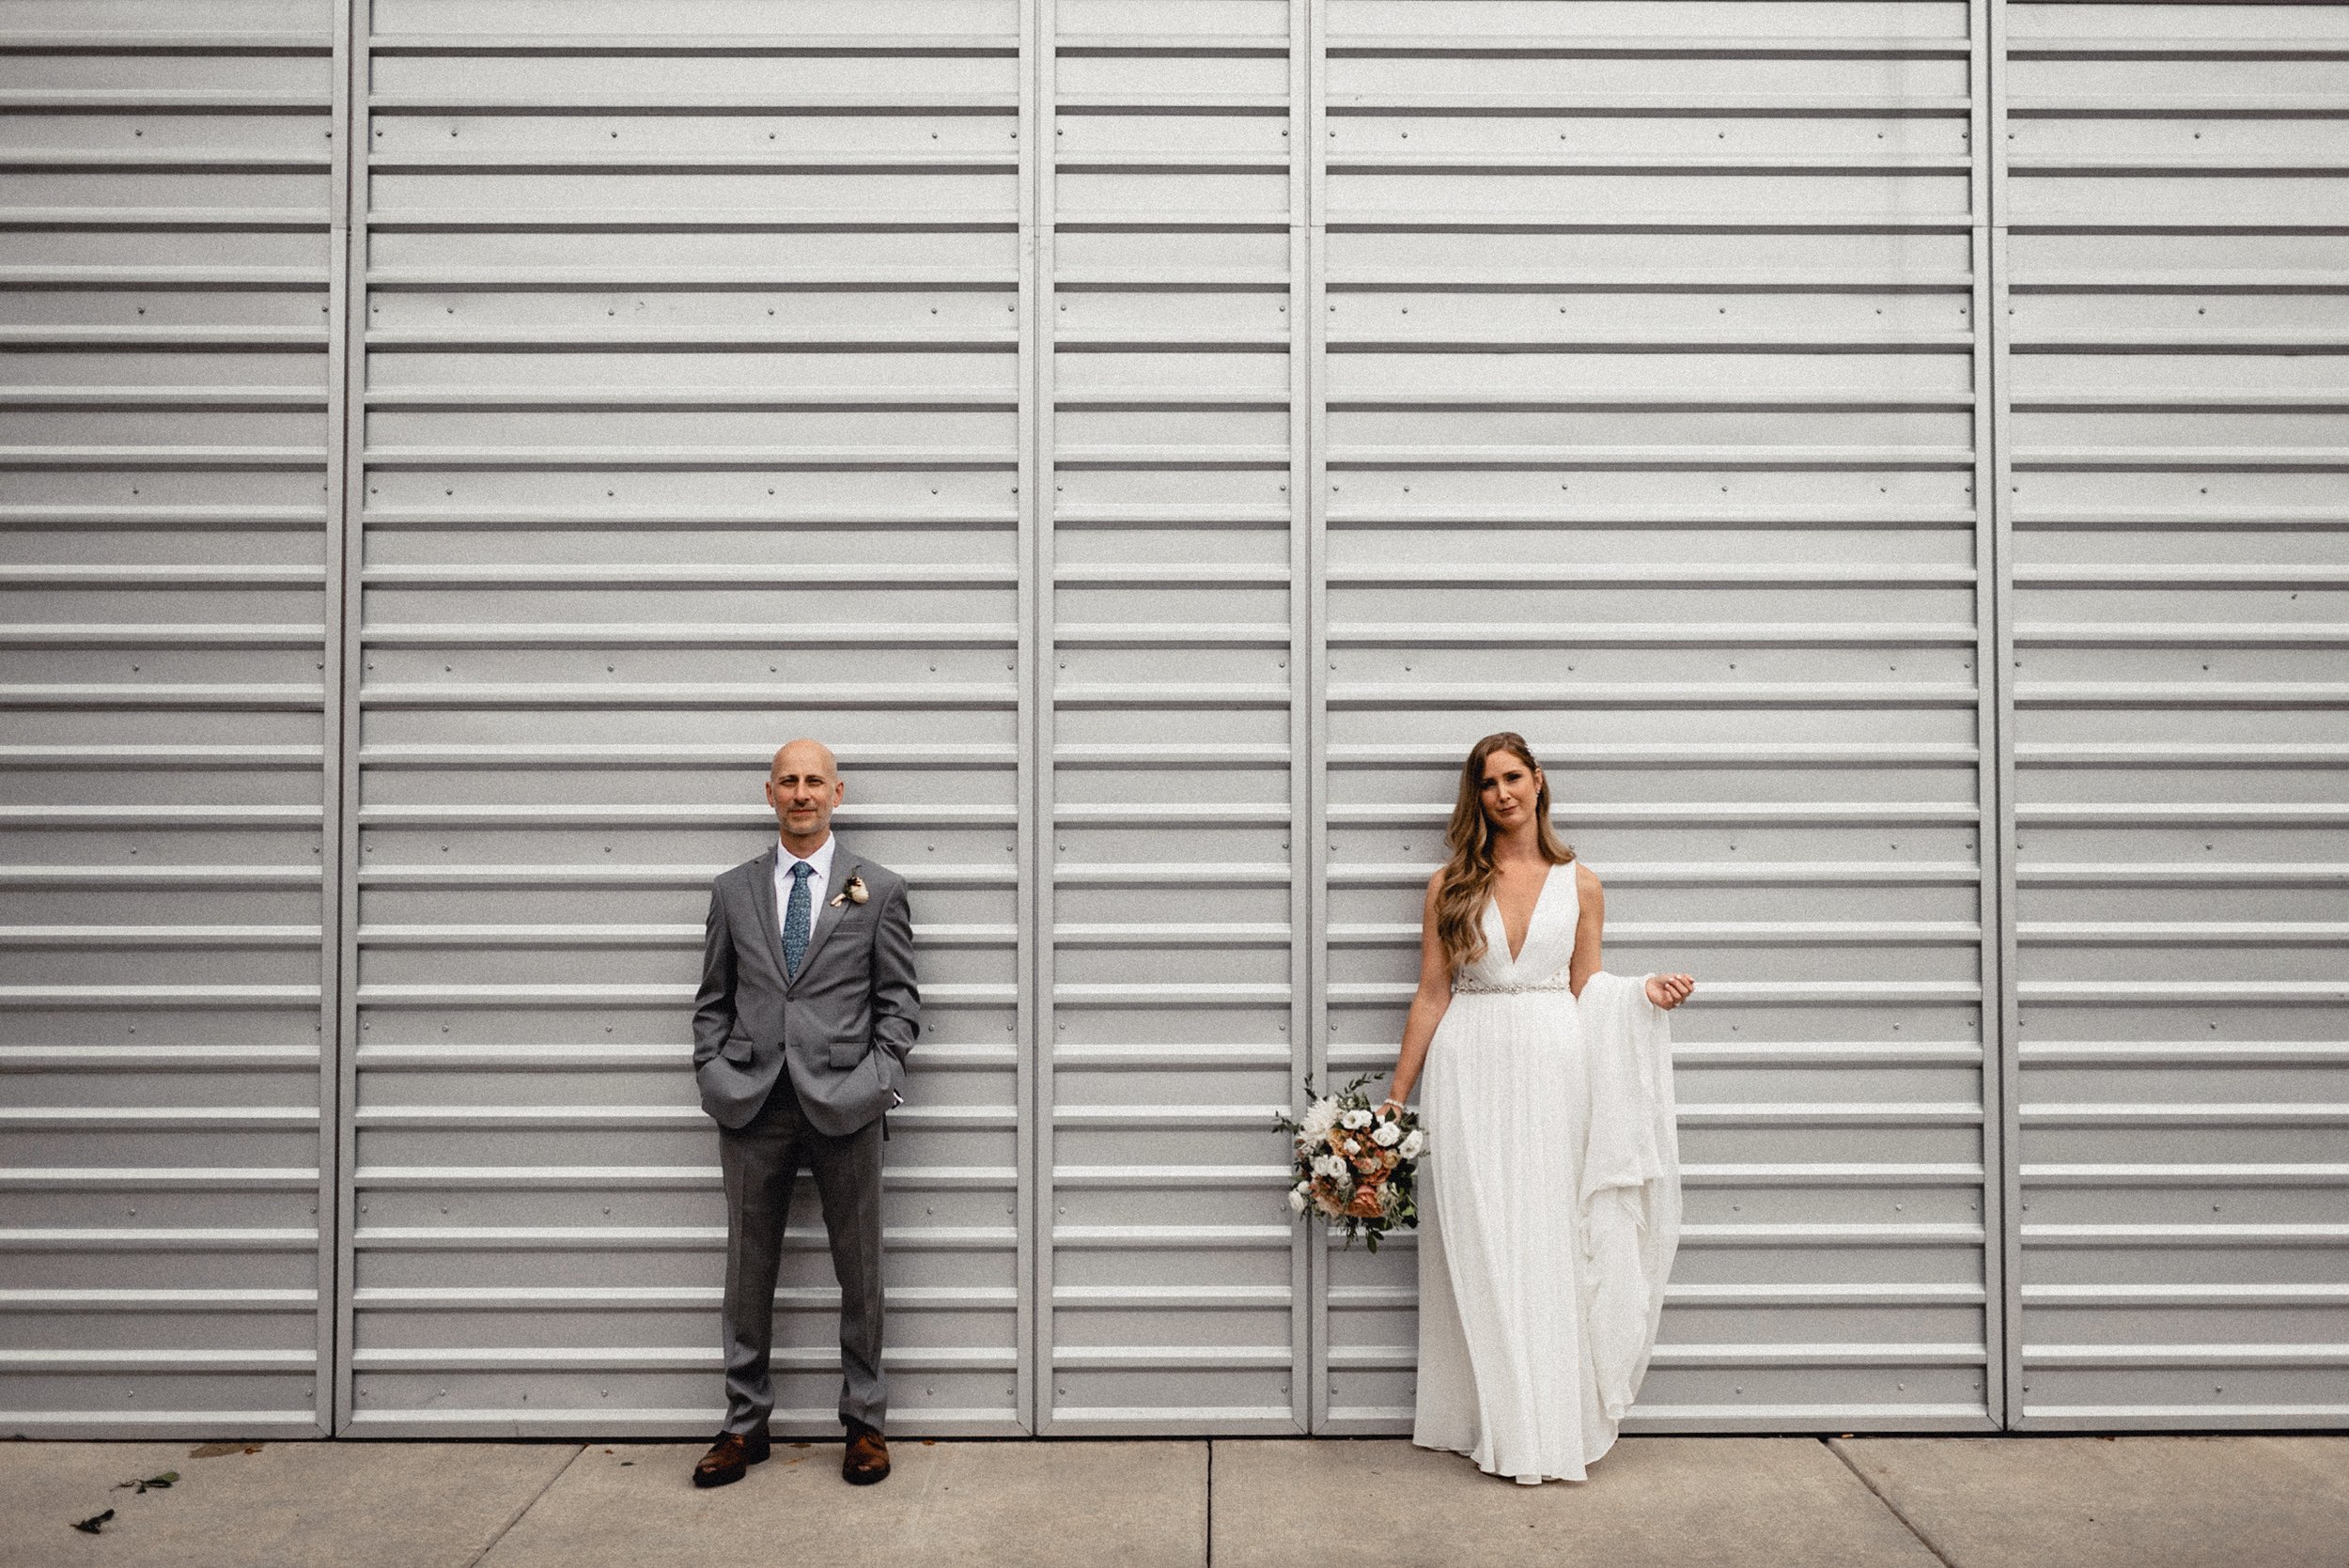 Requiem Images - Pittsburgh NYC elopement wedding photographer - Tryp Hotel - Sierra -12.jpg